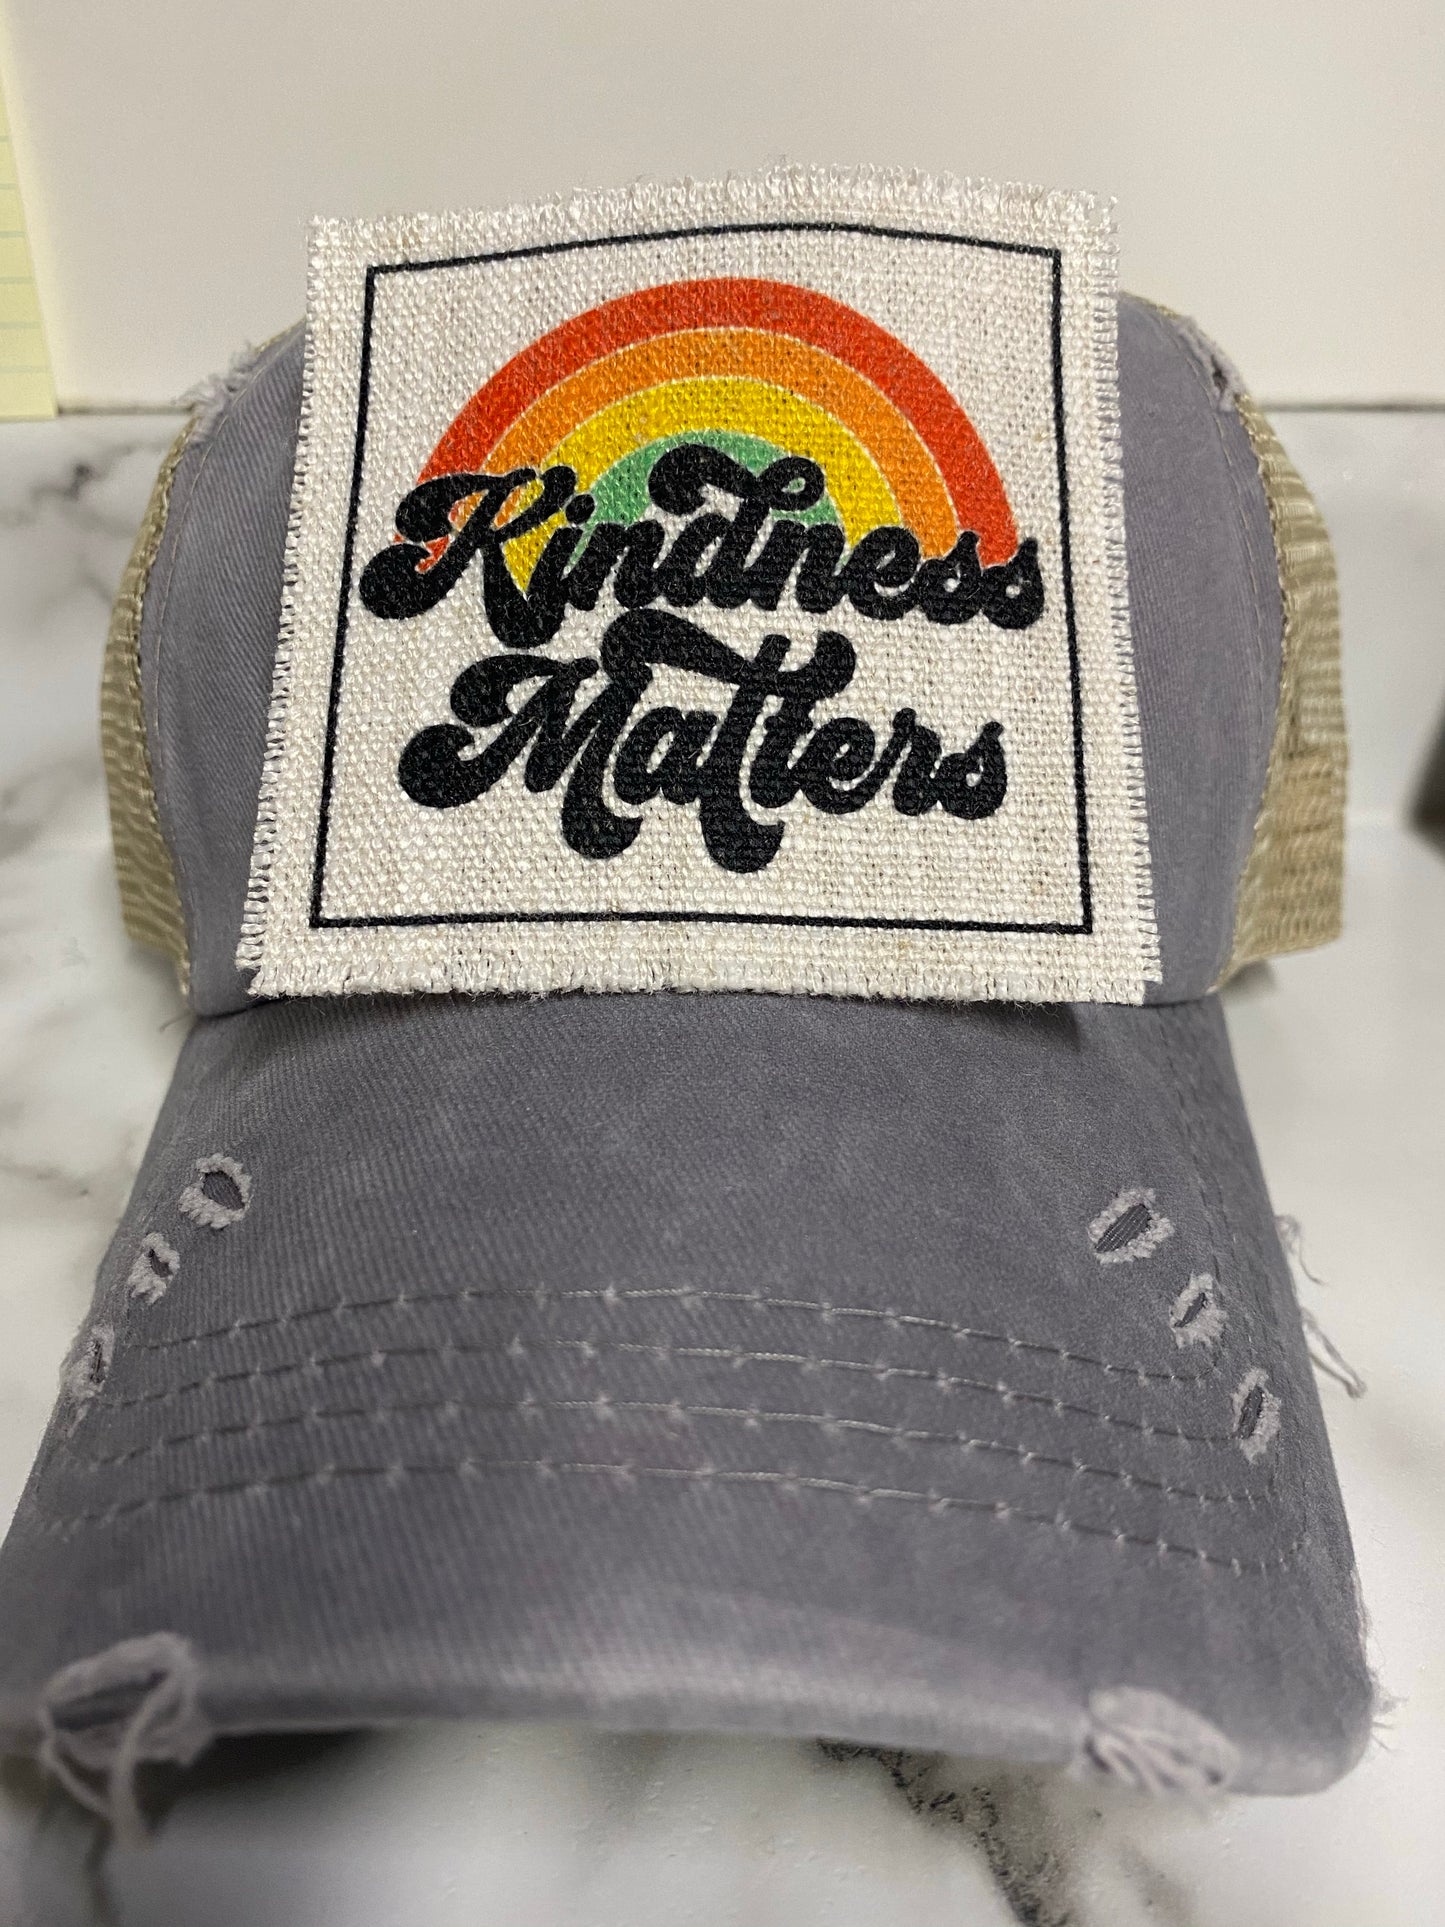 Kindness Matters Hat Patch